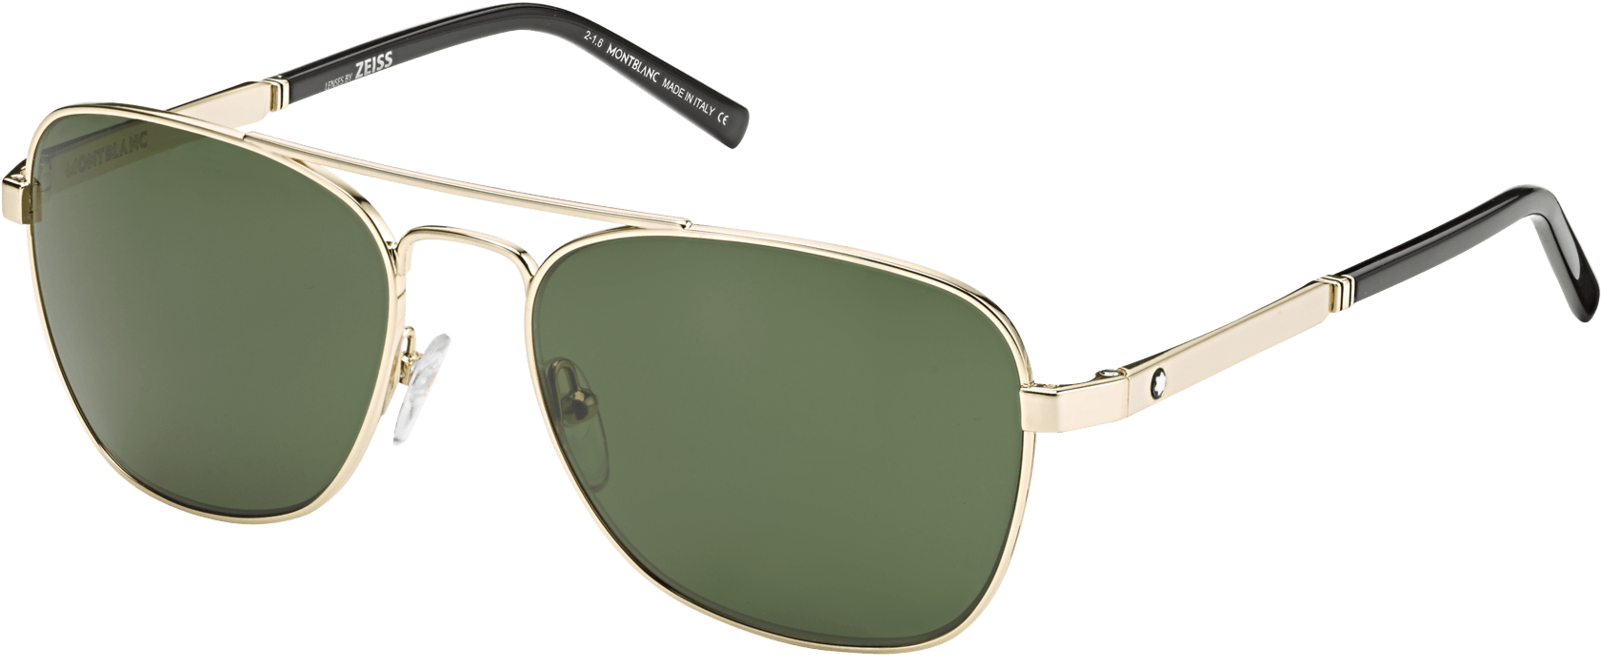 Mlg Sunglasses Png - Half Frame Tortoise Shell Sunglasses For Men Clipart (1600x1600), Png Download